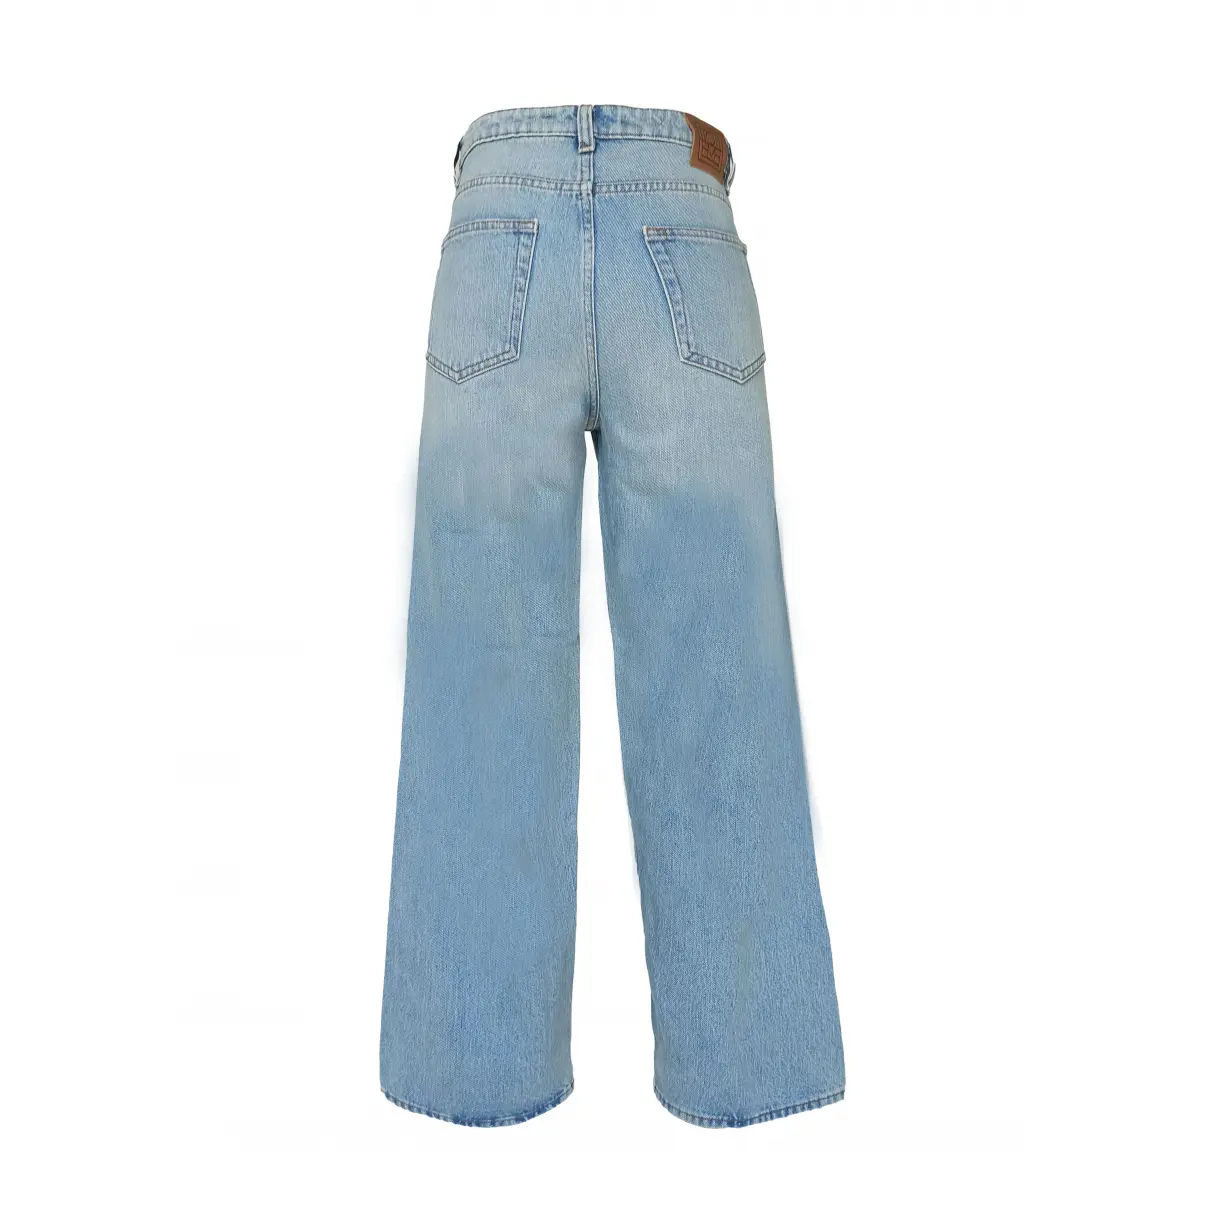 Buy Totême Flair large jeans online